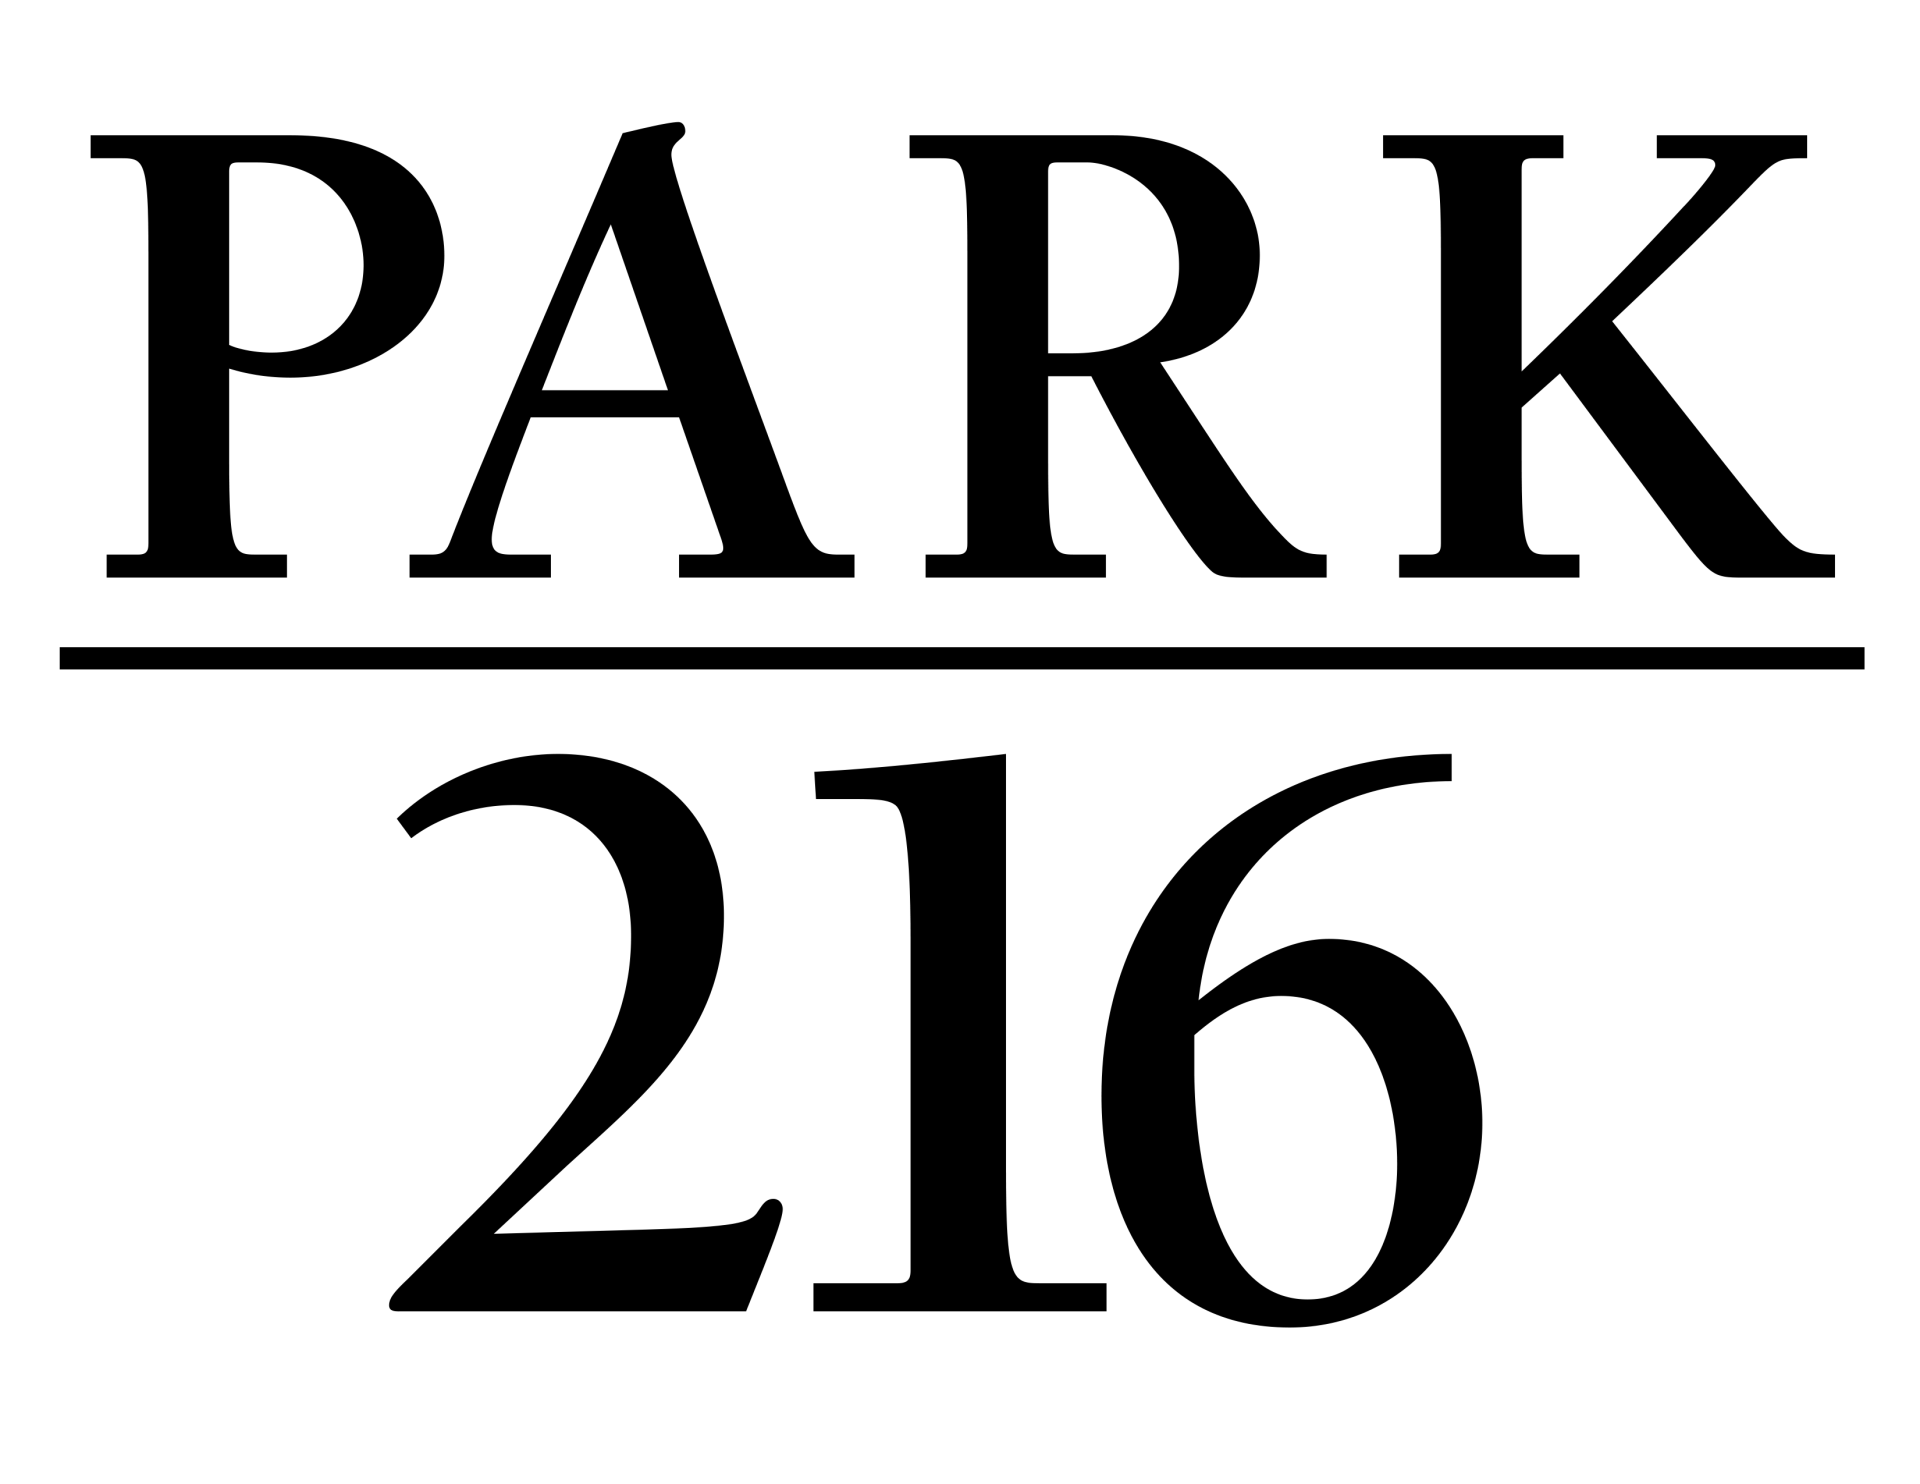 Park 216 Logo